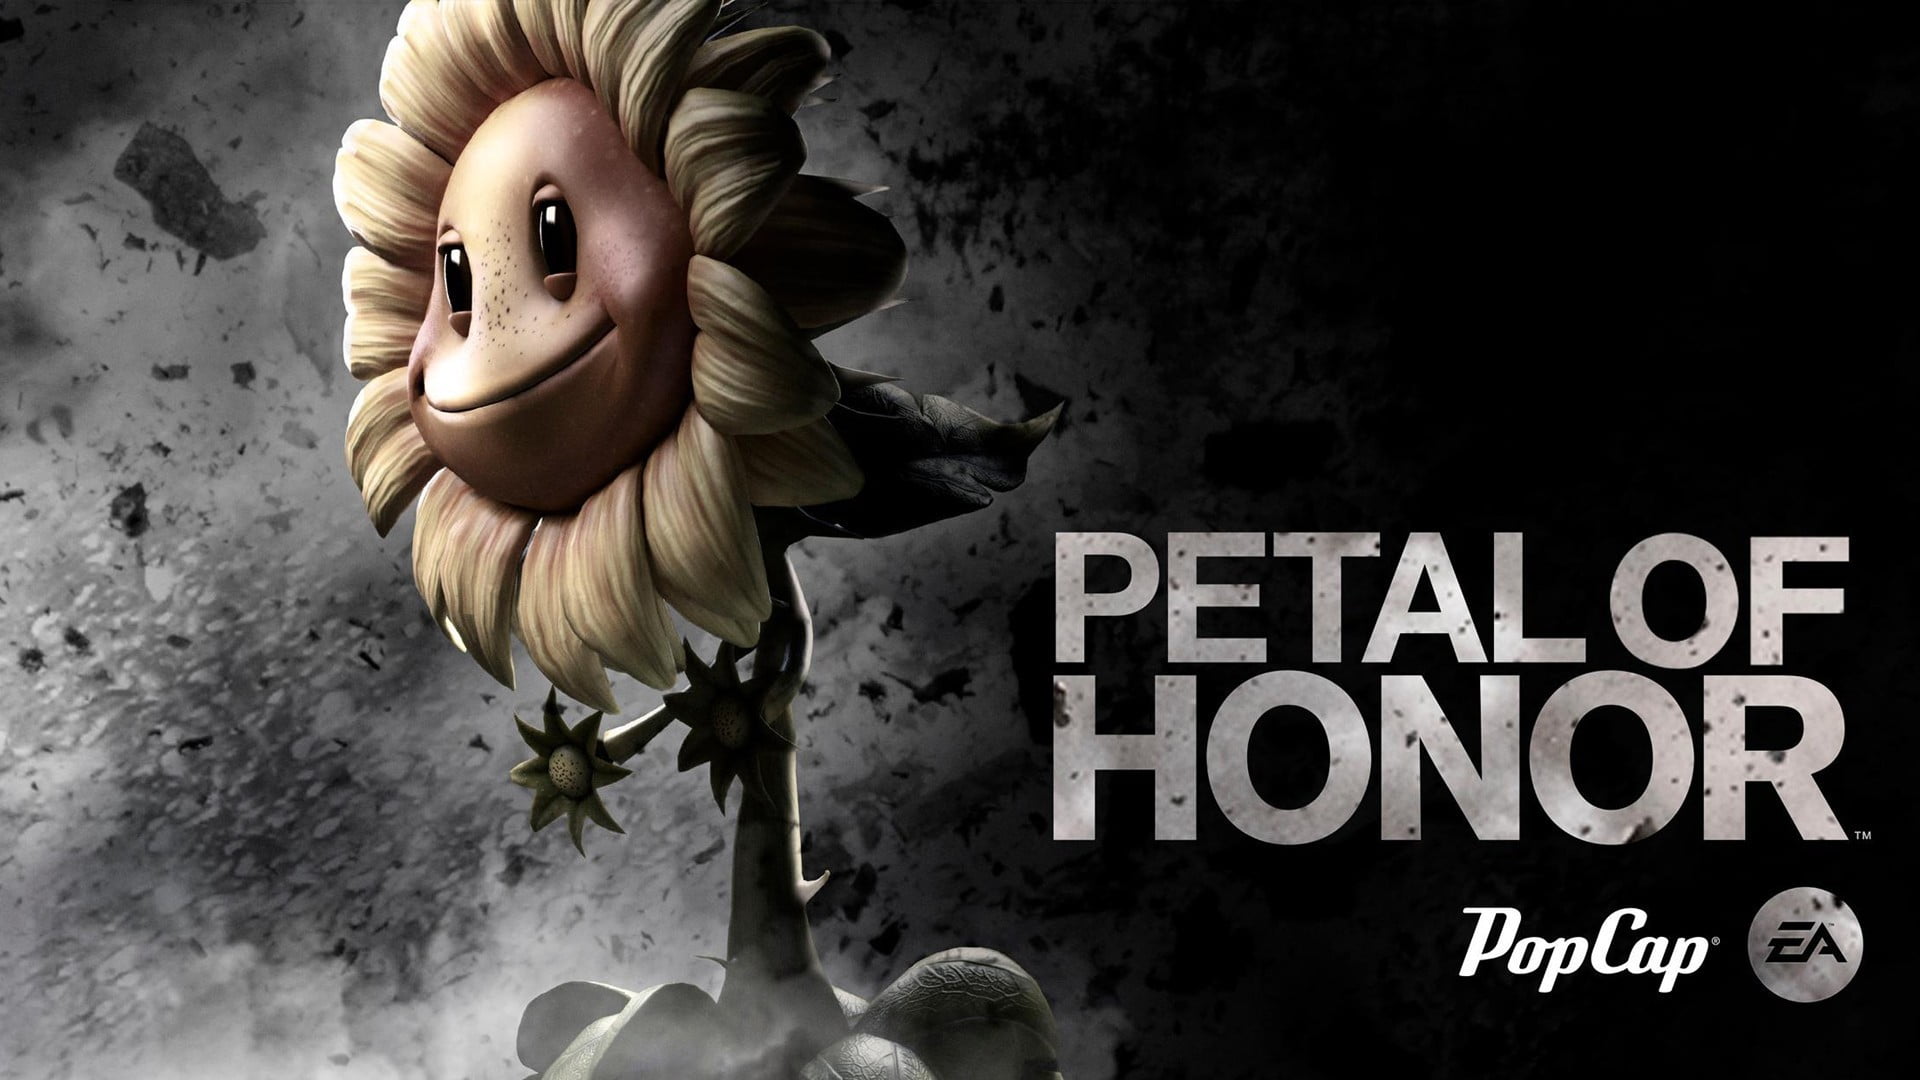 PopCop Petal of Honor game digital wallpaper, plants, Medal of Honor, Plants vs. Zombies